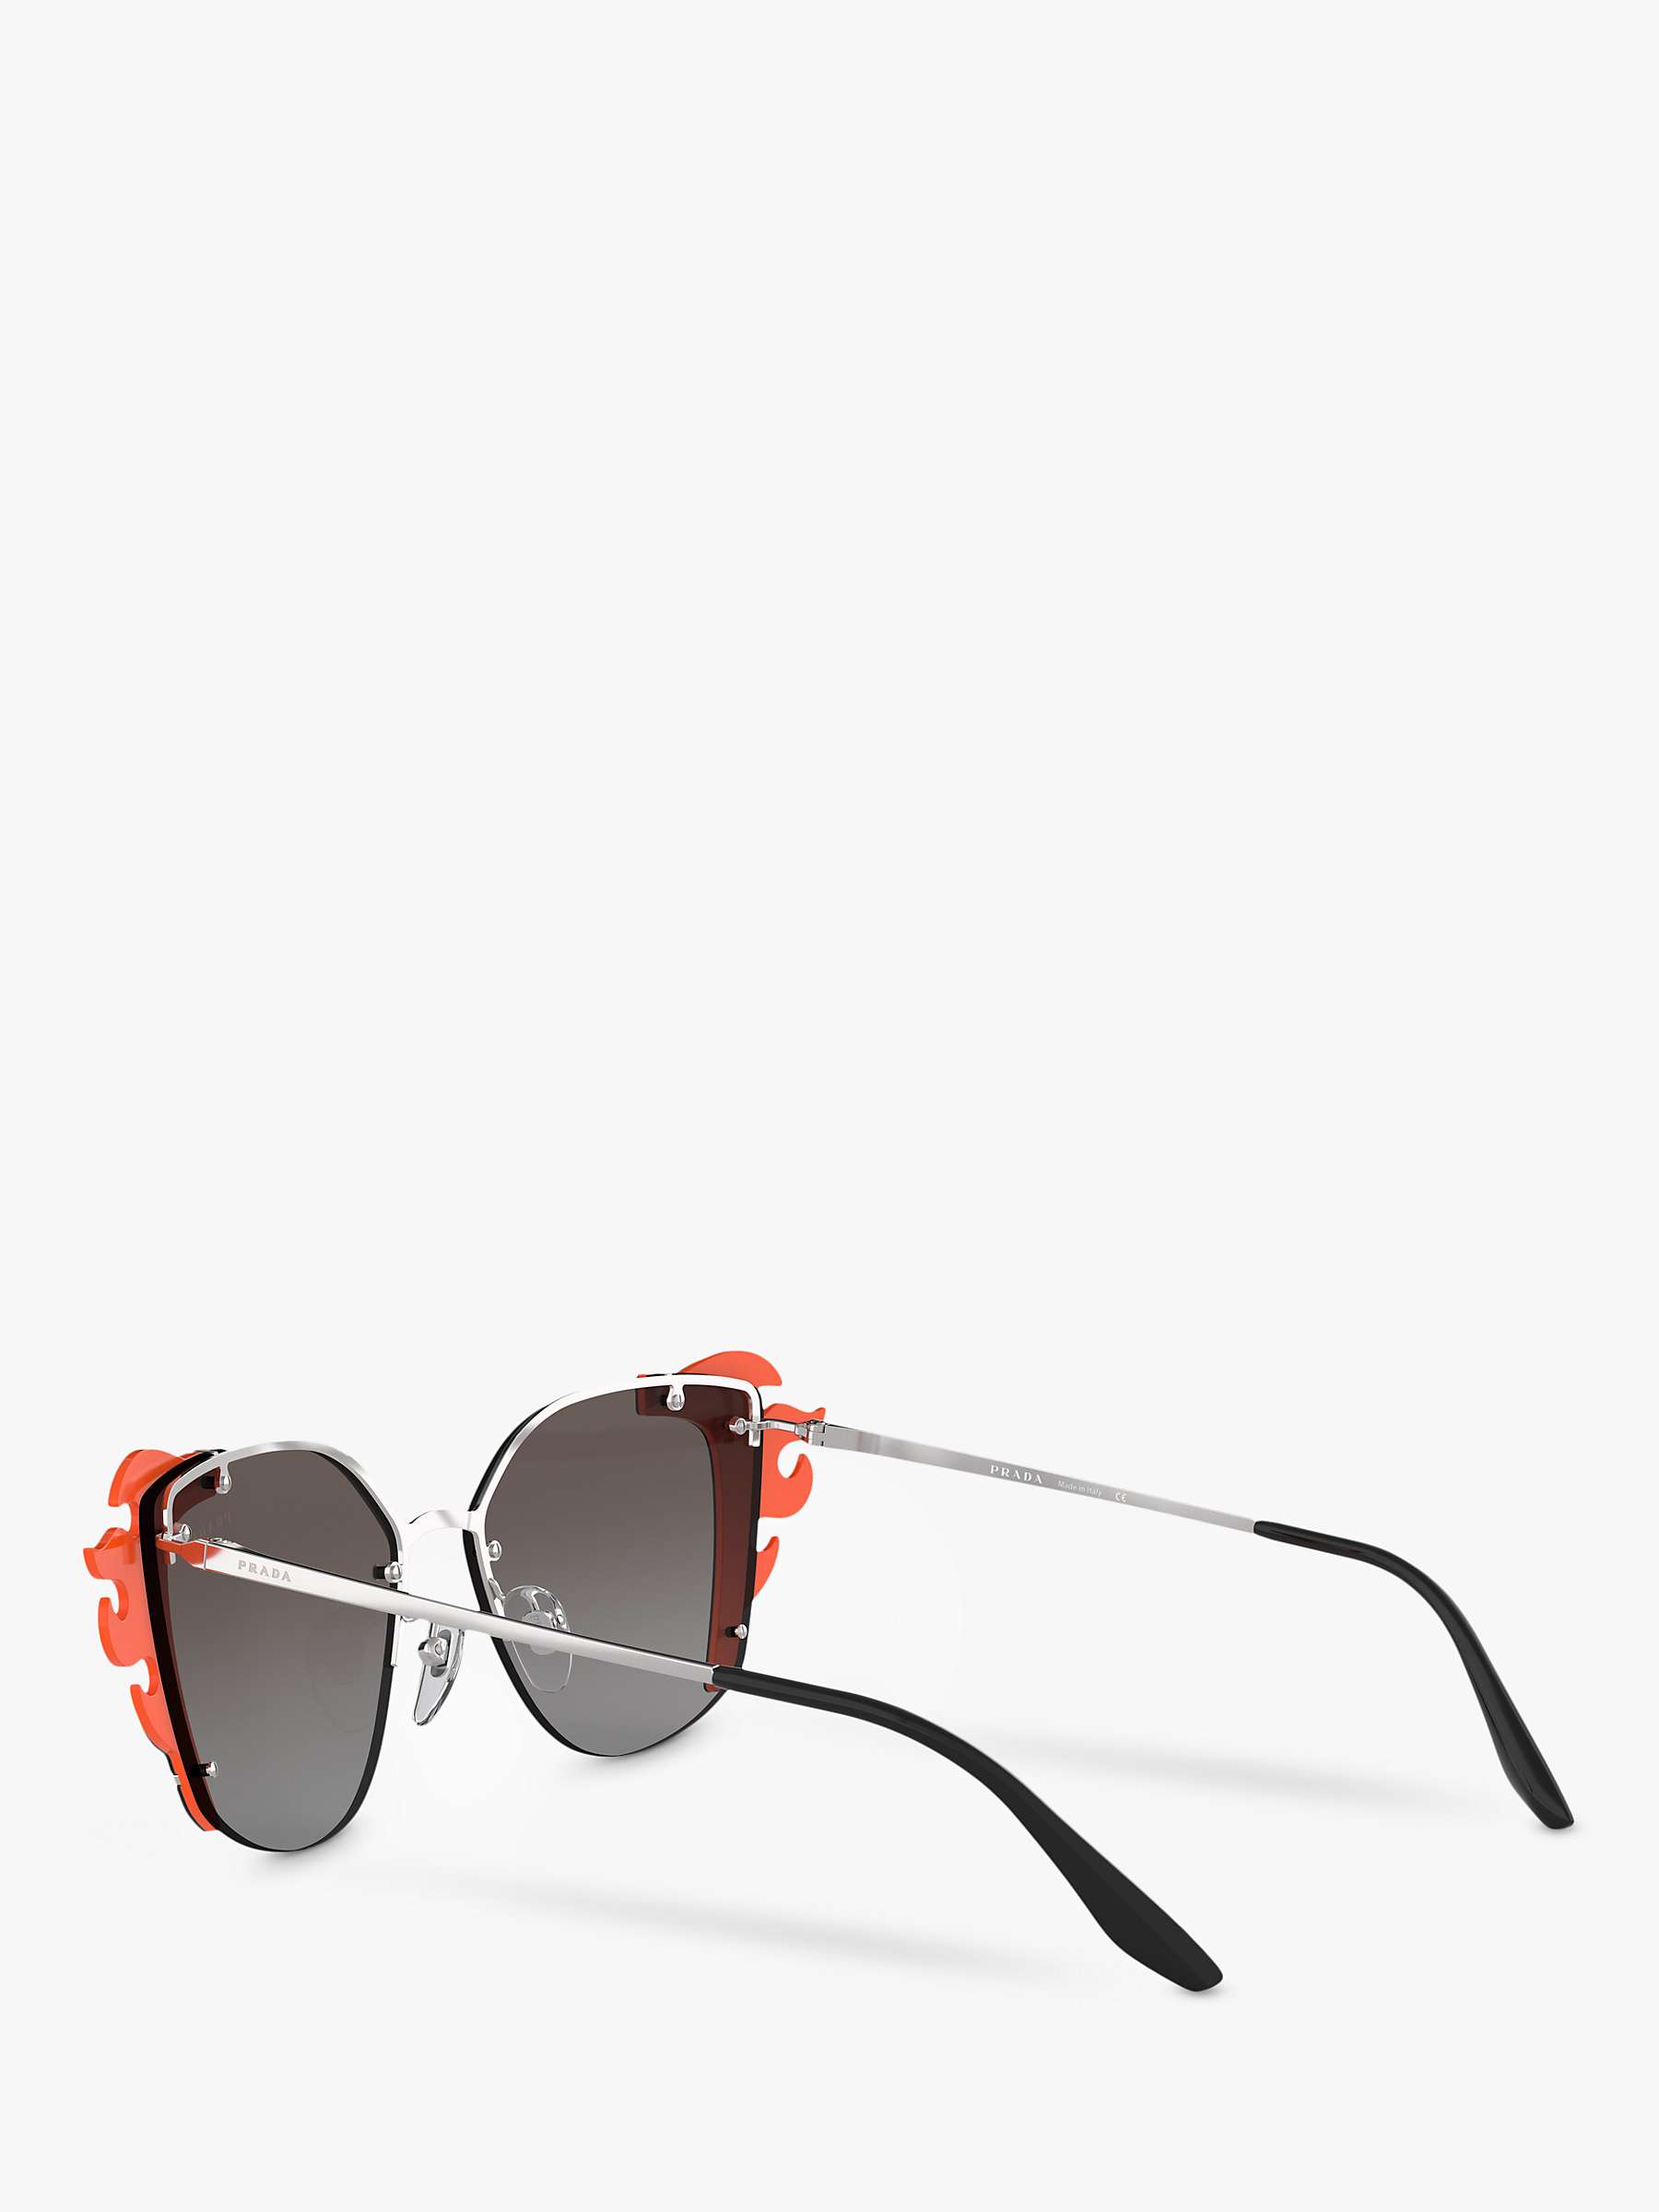 Buy Prada PR 59VS Women's Square Sunglasses, Silver/Grey Online at johnlewis.com